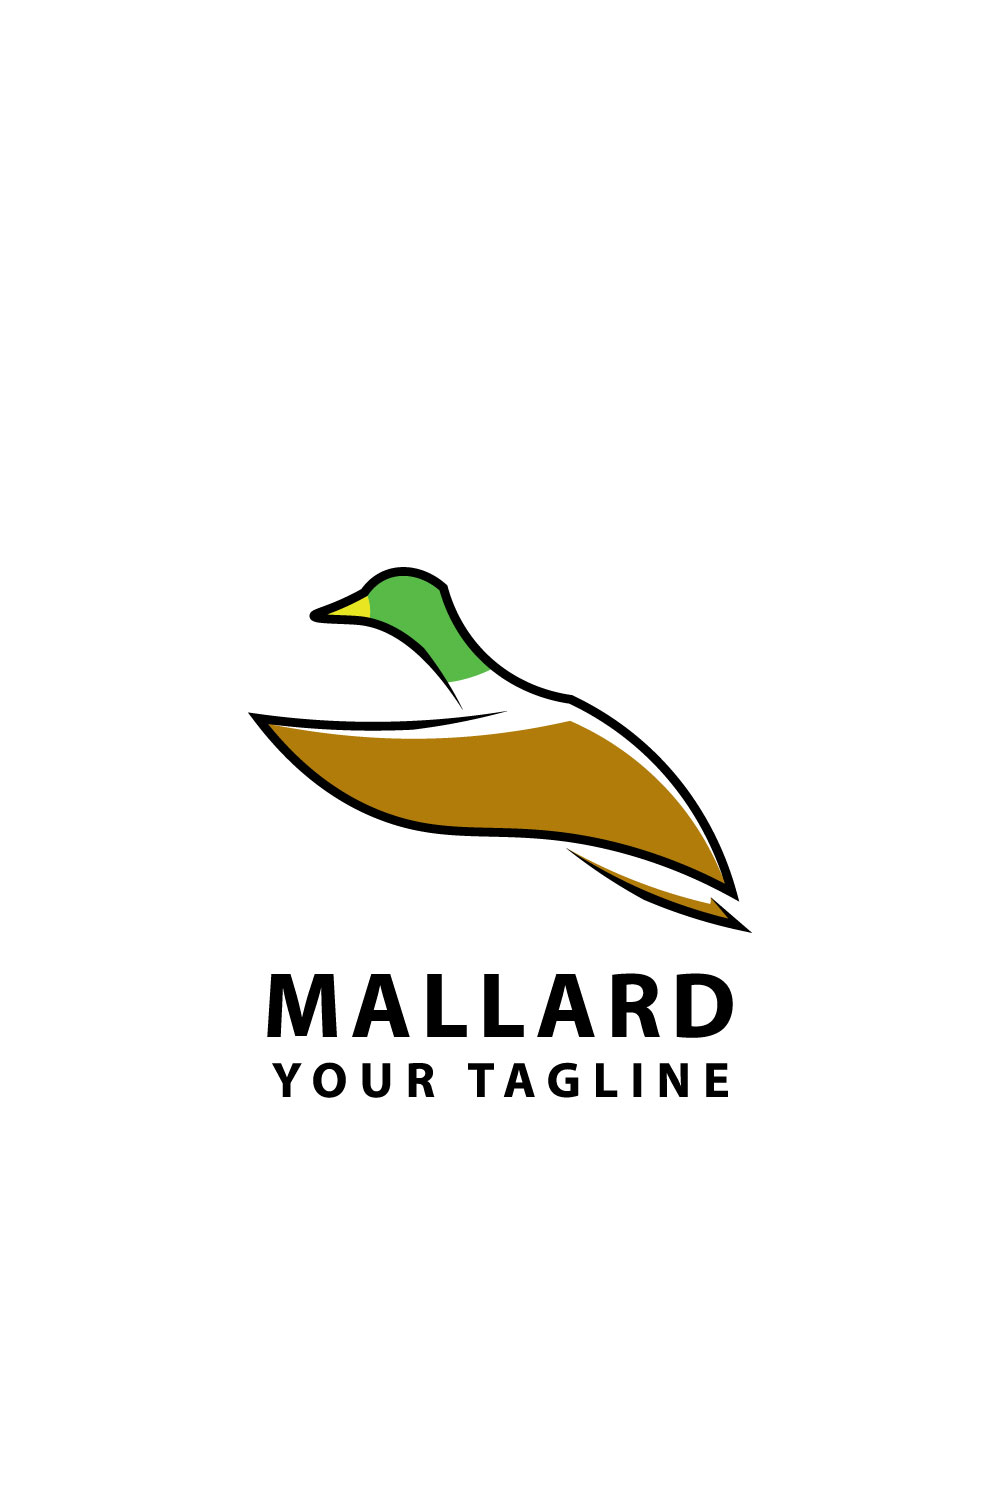 Mallard Abstract Logo pinterest preview image.